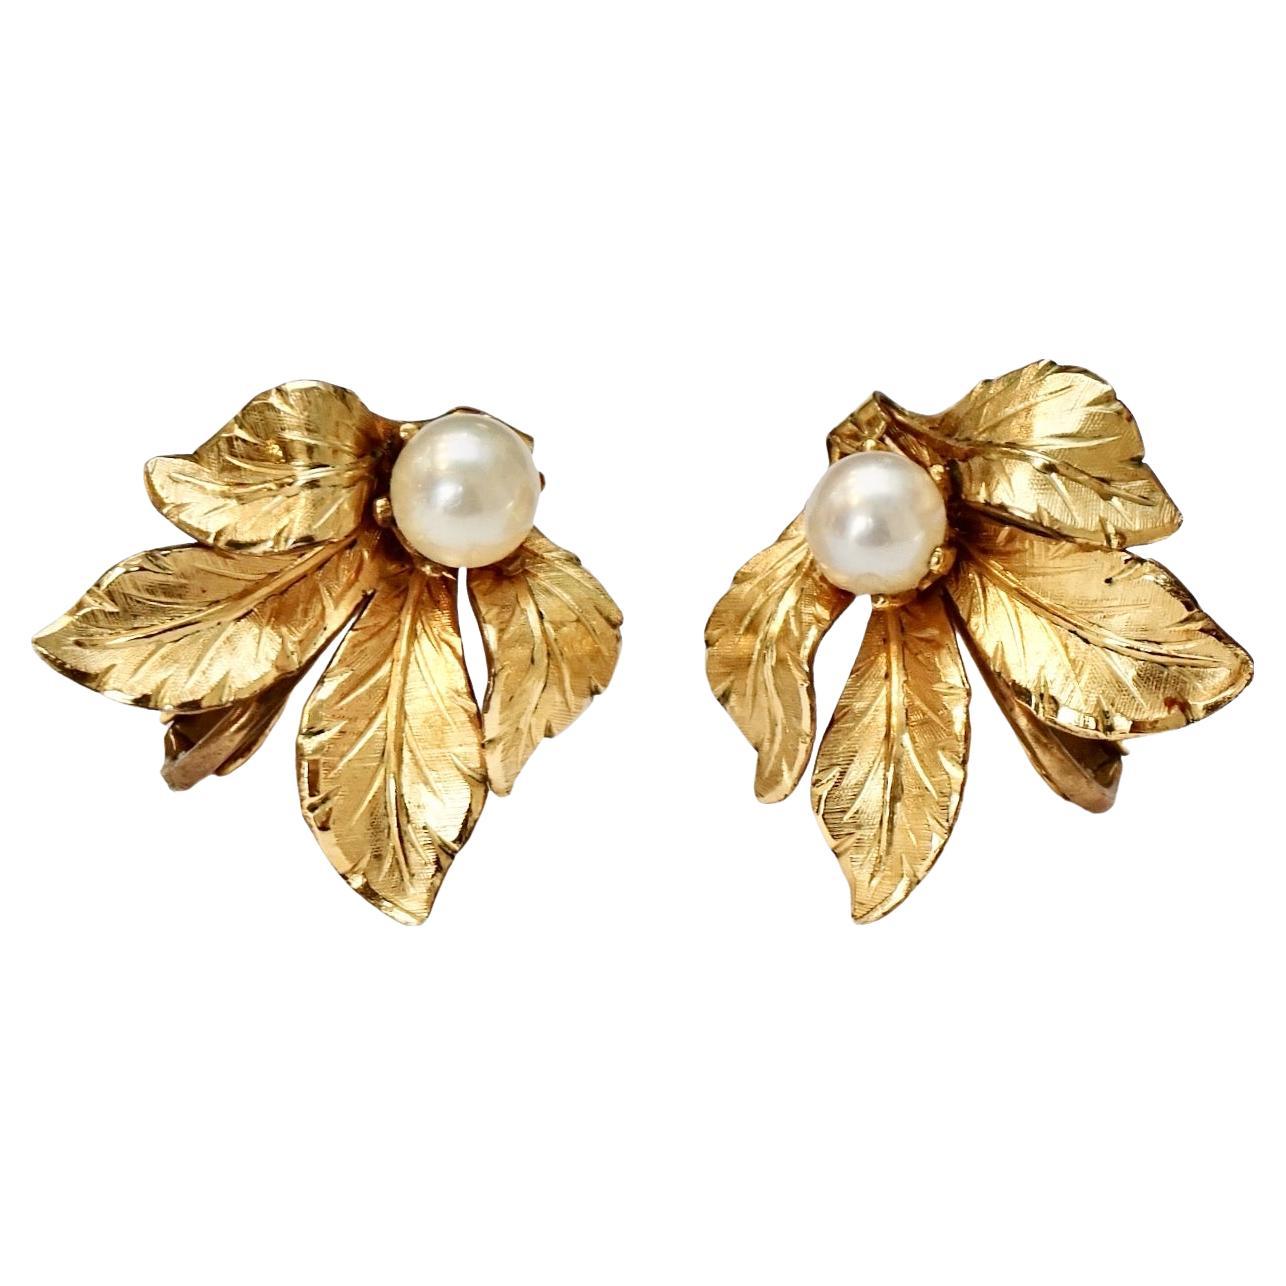 Gold-filled Lever-Back Earrings